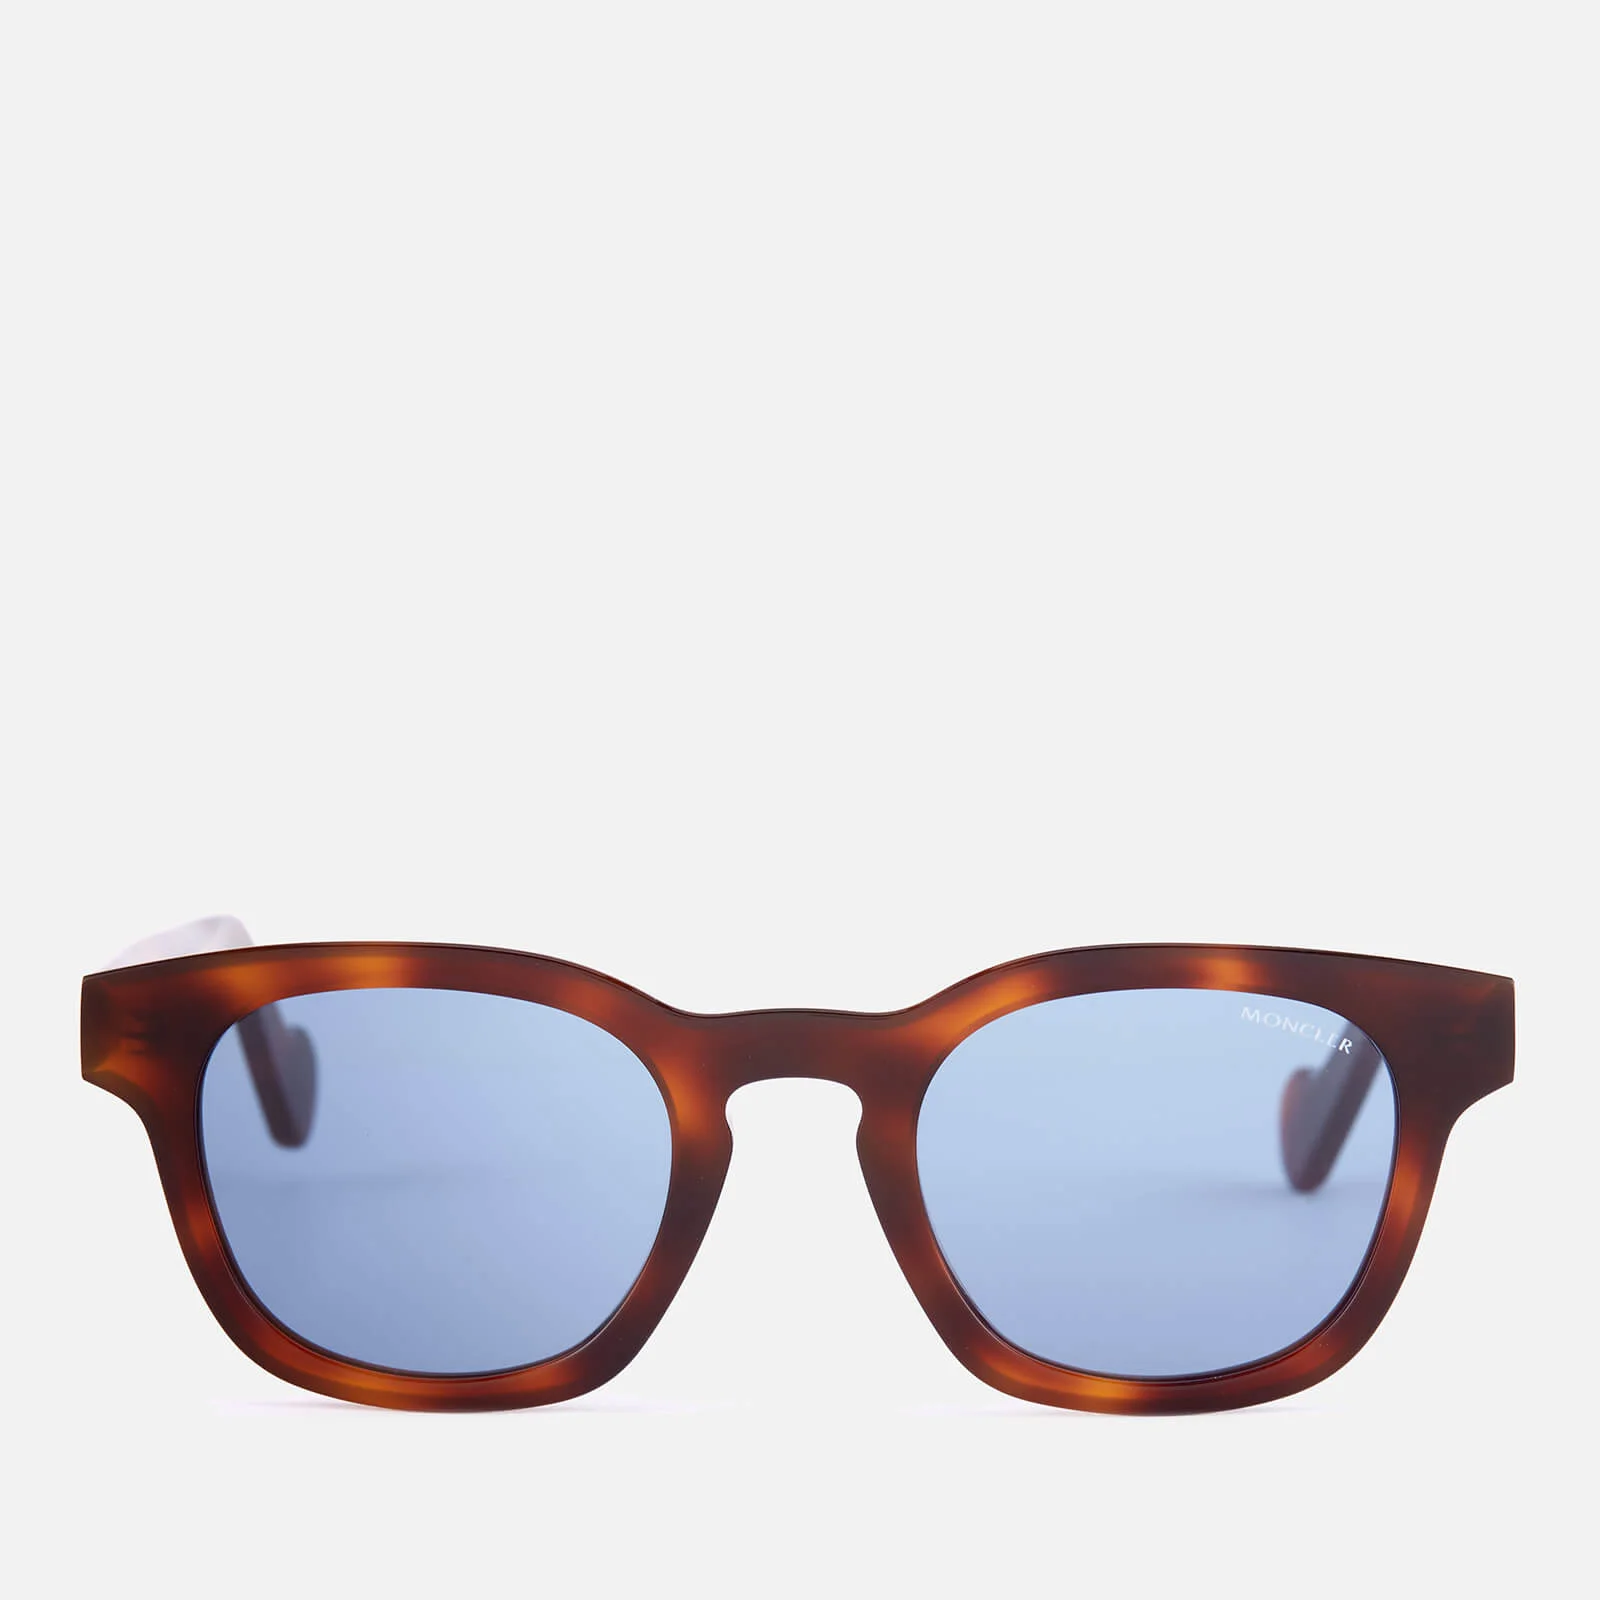 Moncler Men's Wayfarer Sunglasses - Havana/Other/Blue Image 1